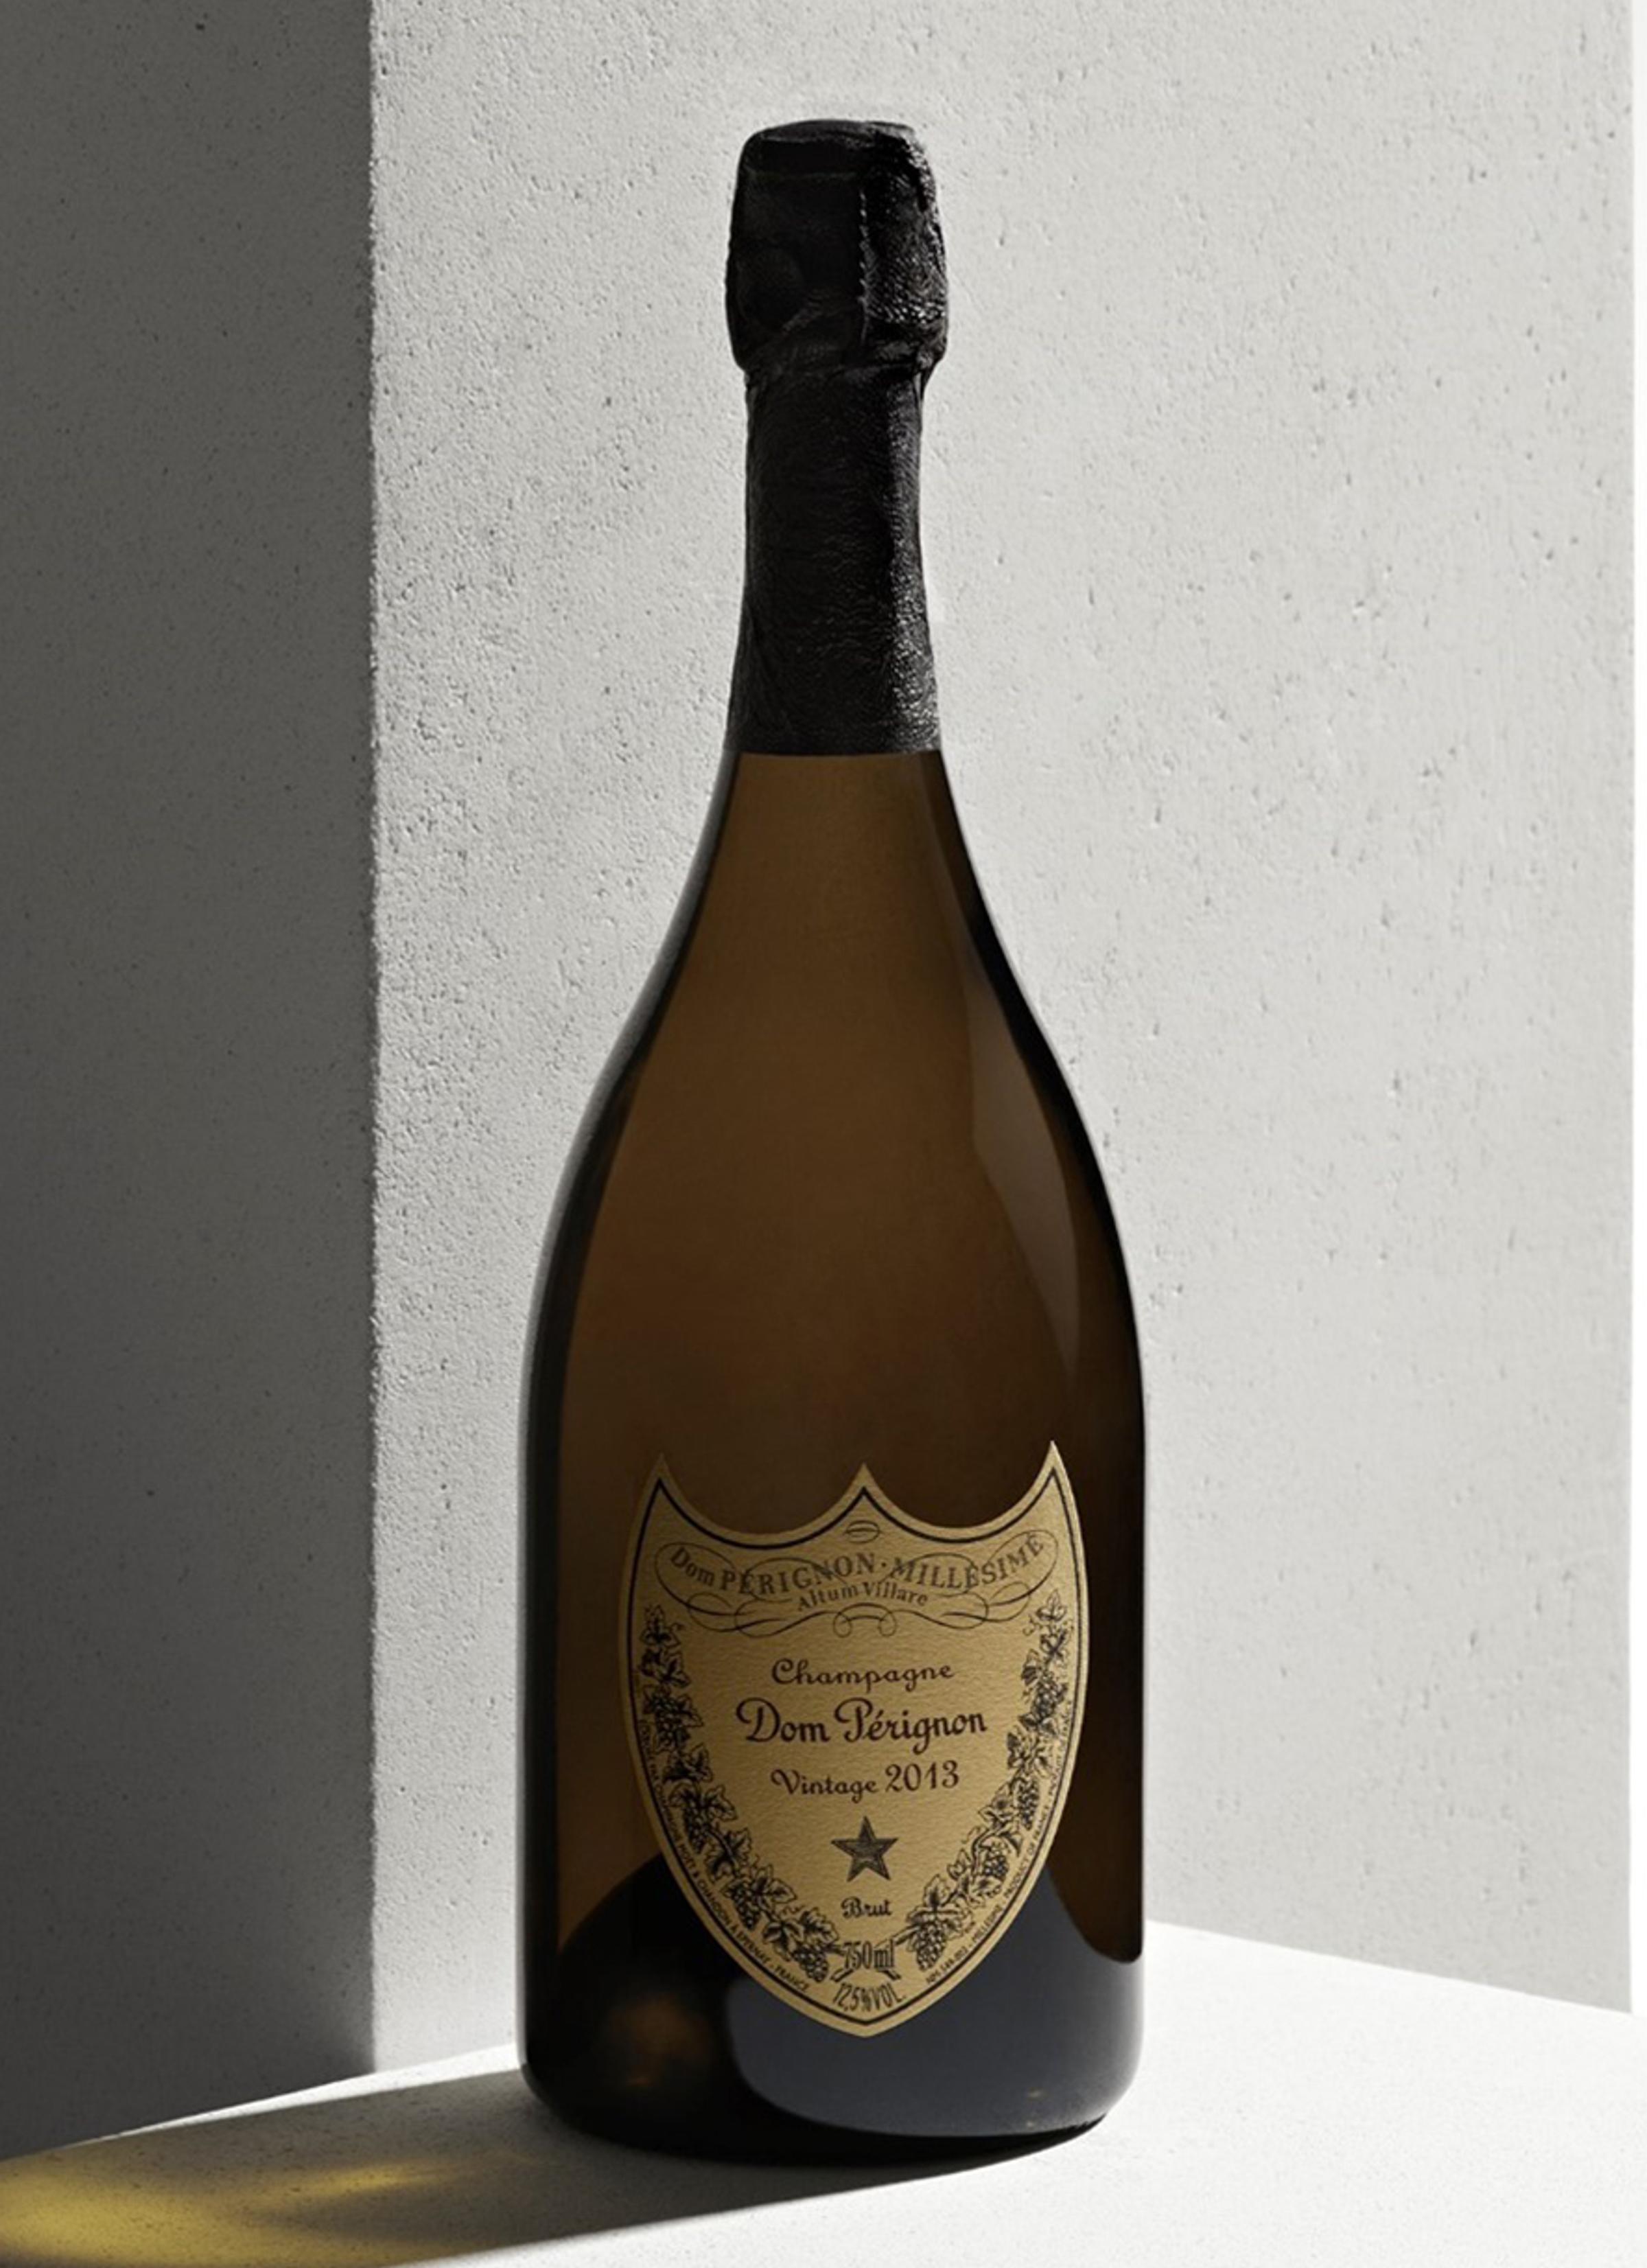 Moet & Chandon - 2004 - DOM PERIGNON P2 - 750 ml. - Champagne –